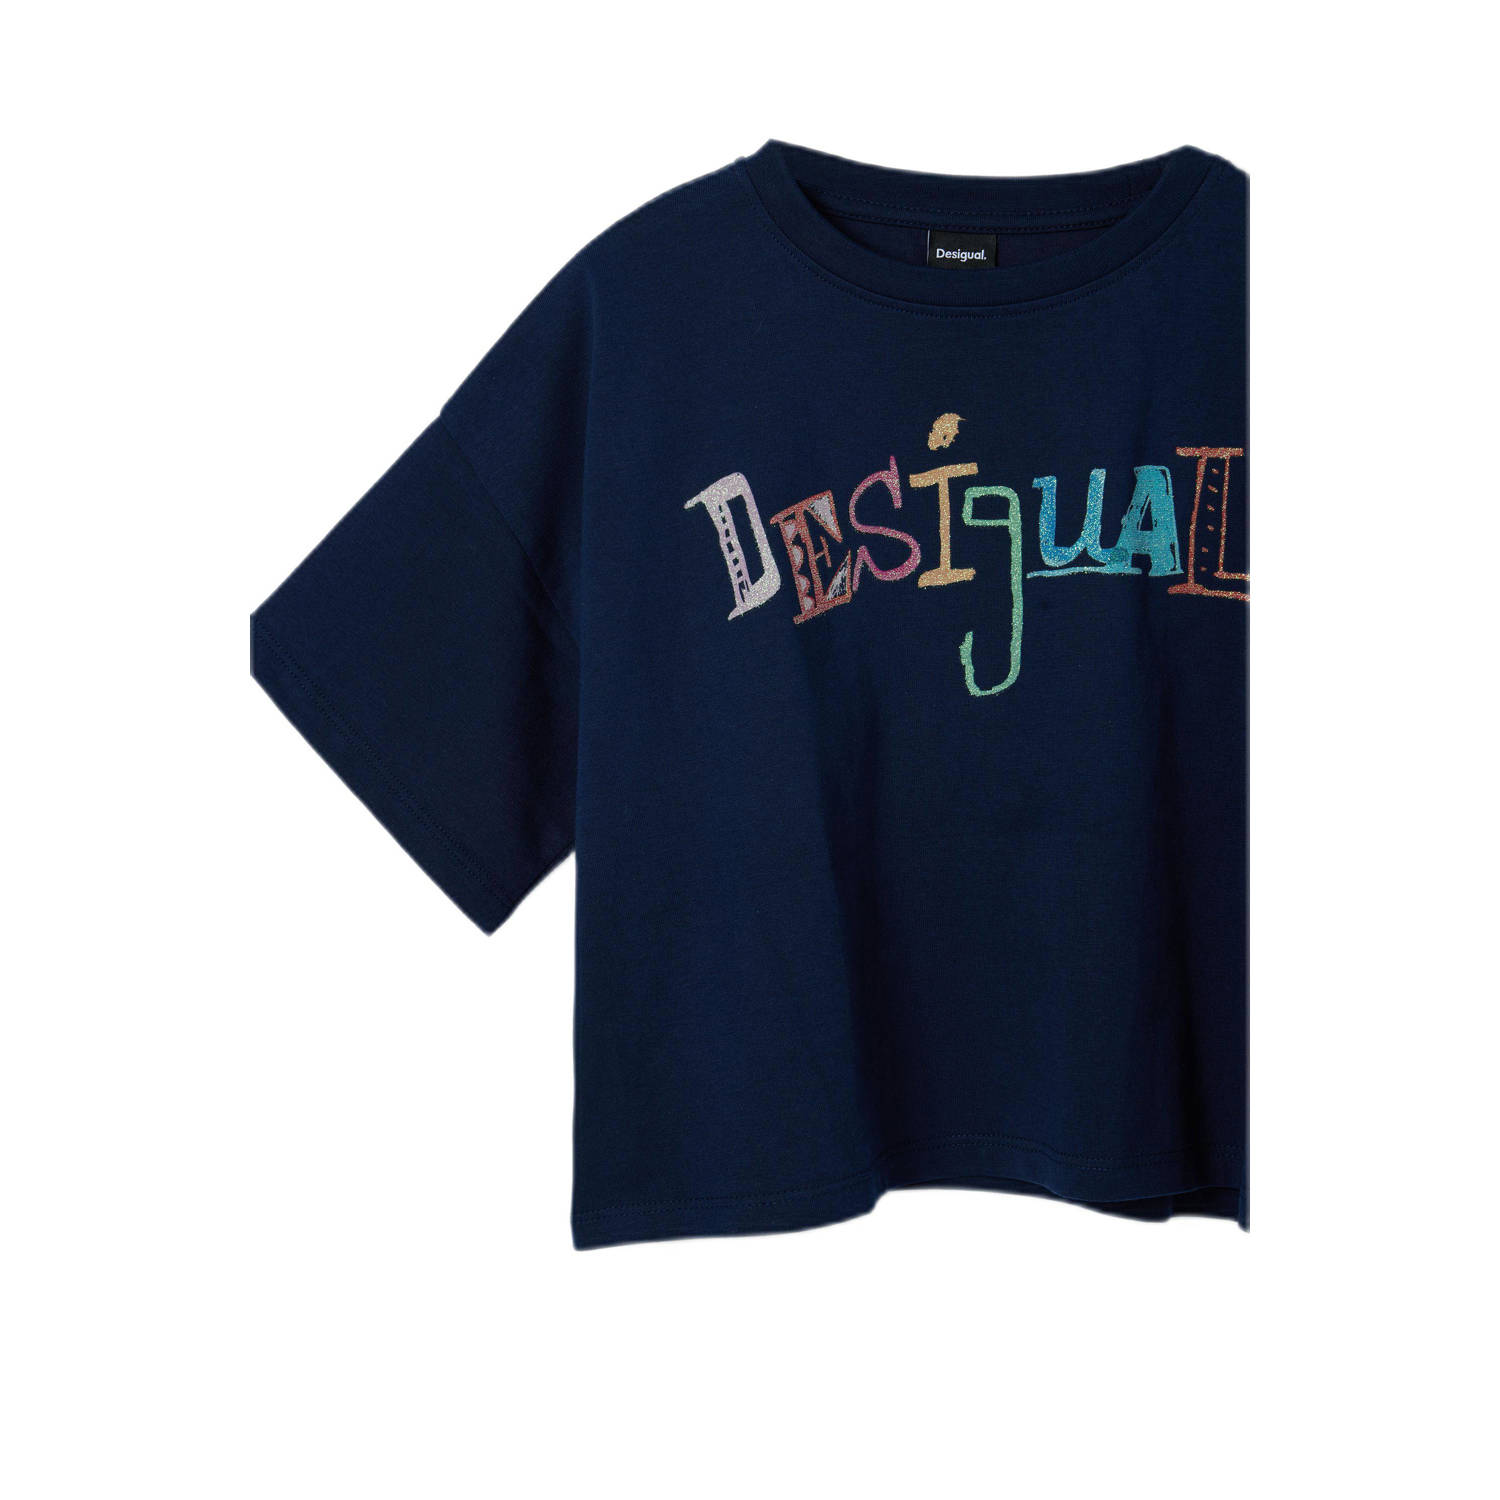 Desigual T-shirt met tekst donkerblauw